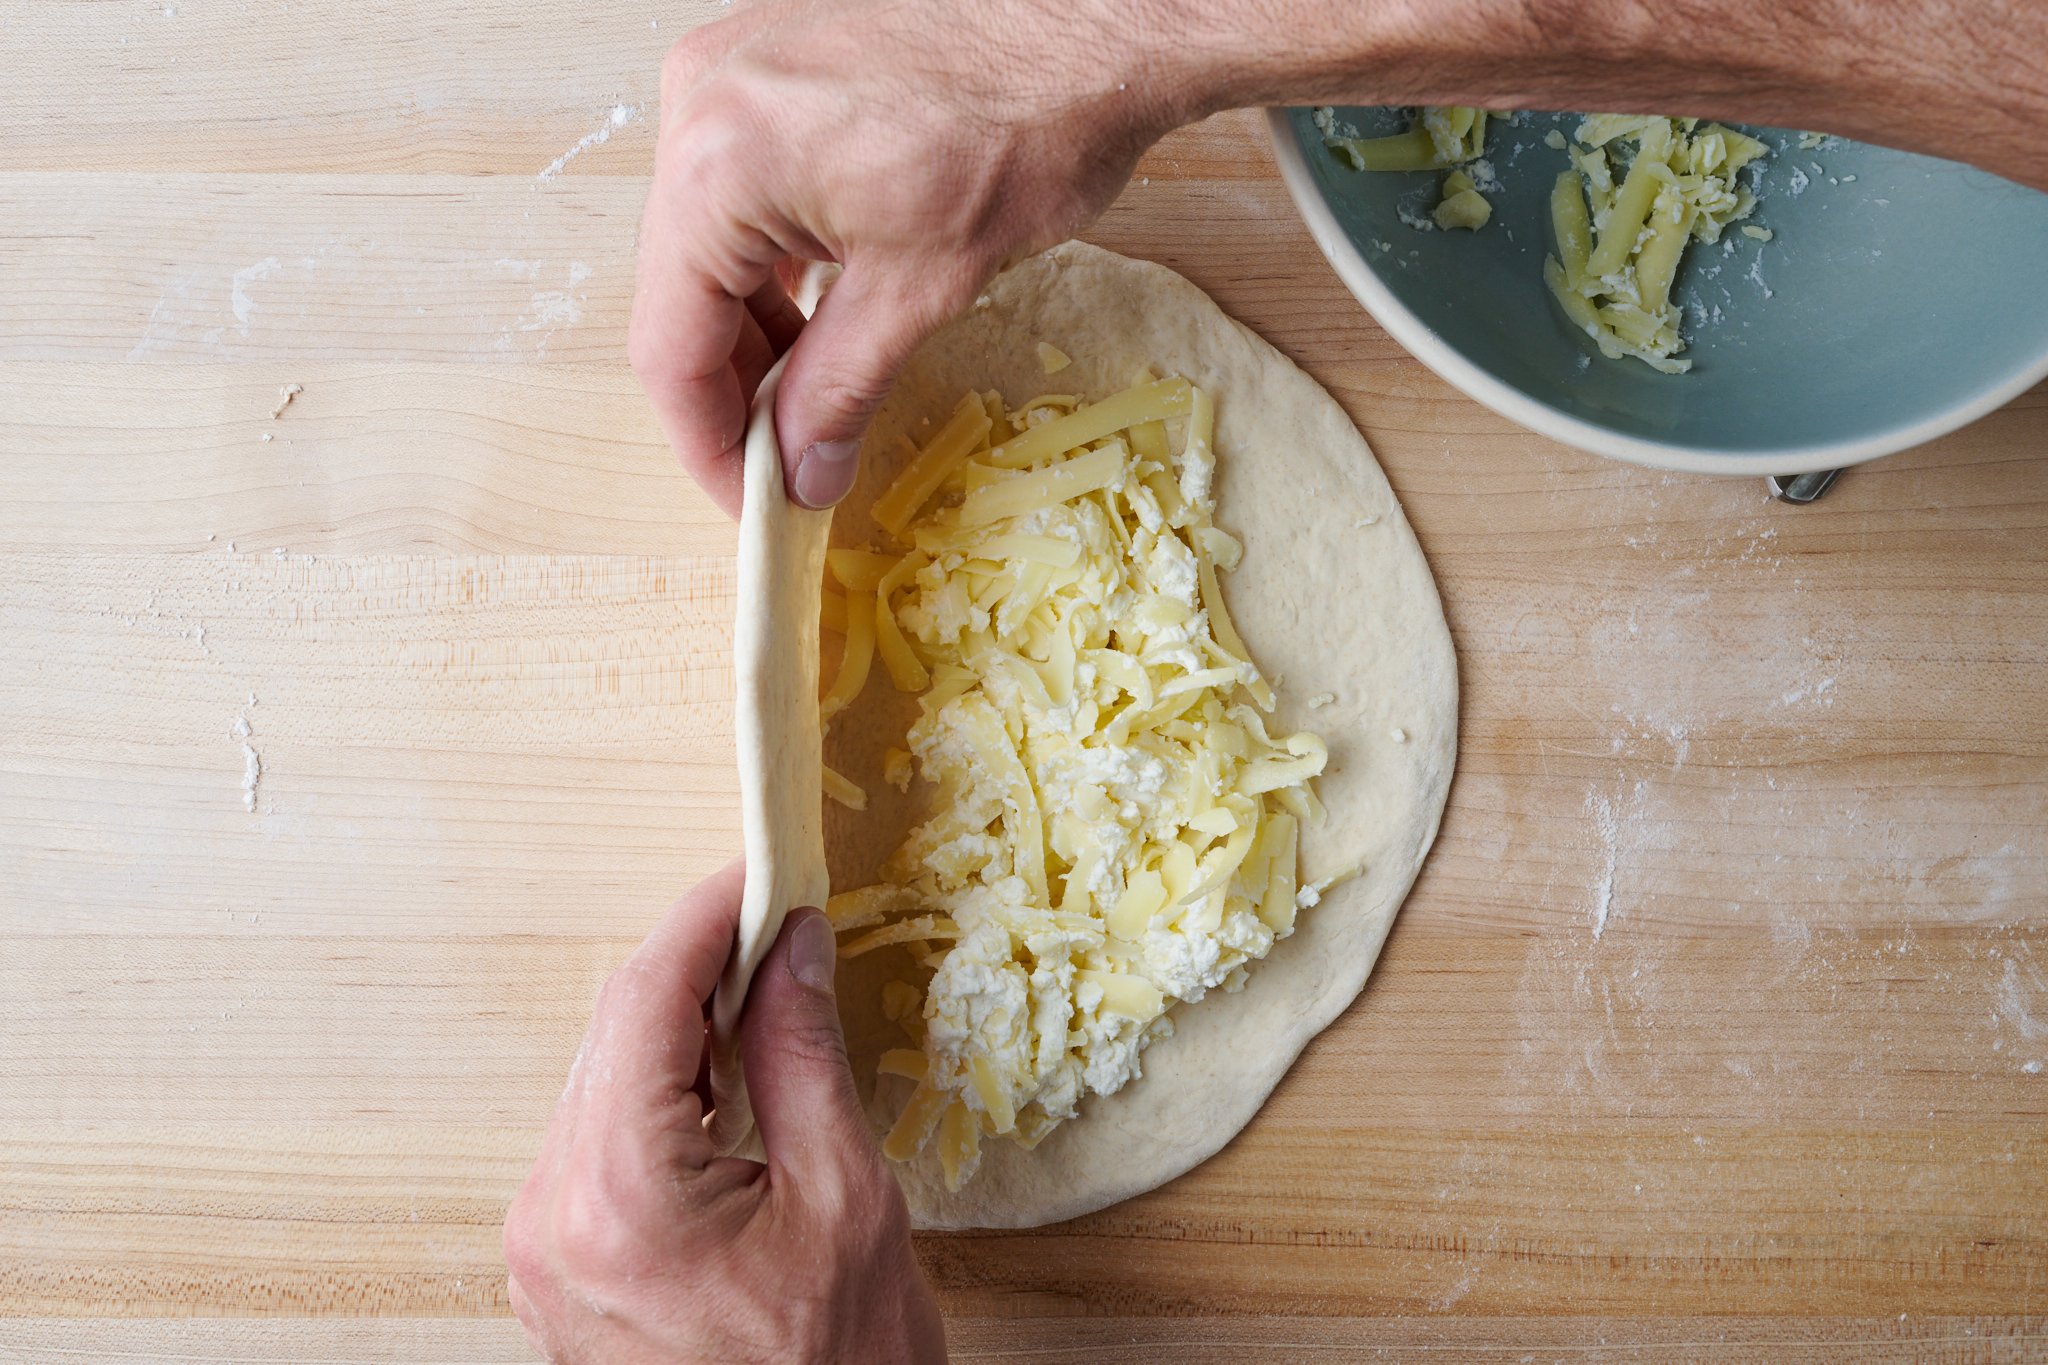 Fold over calzone dough